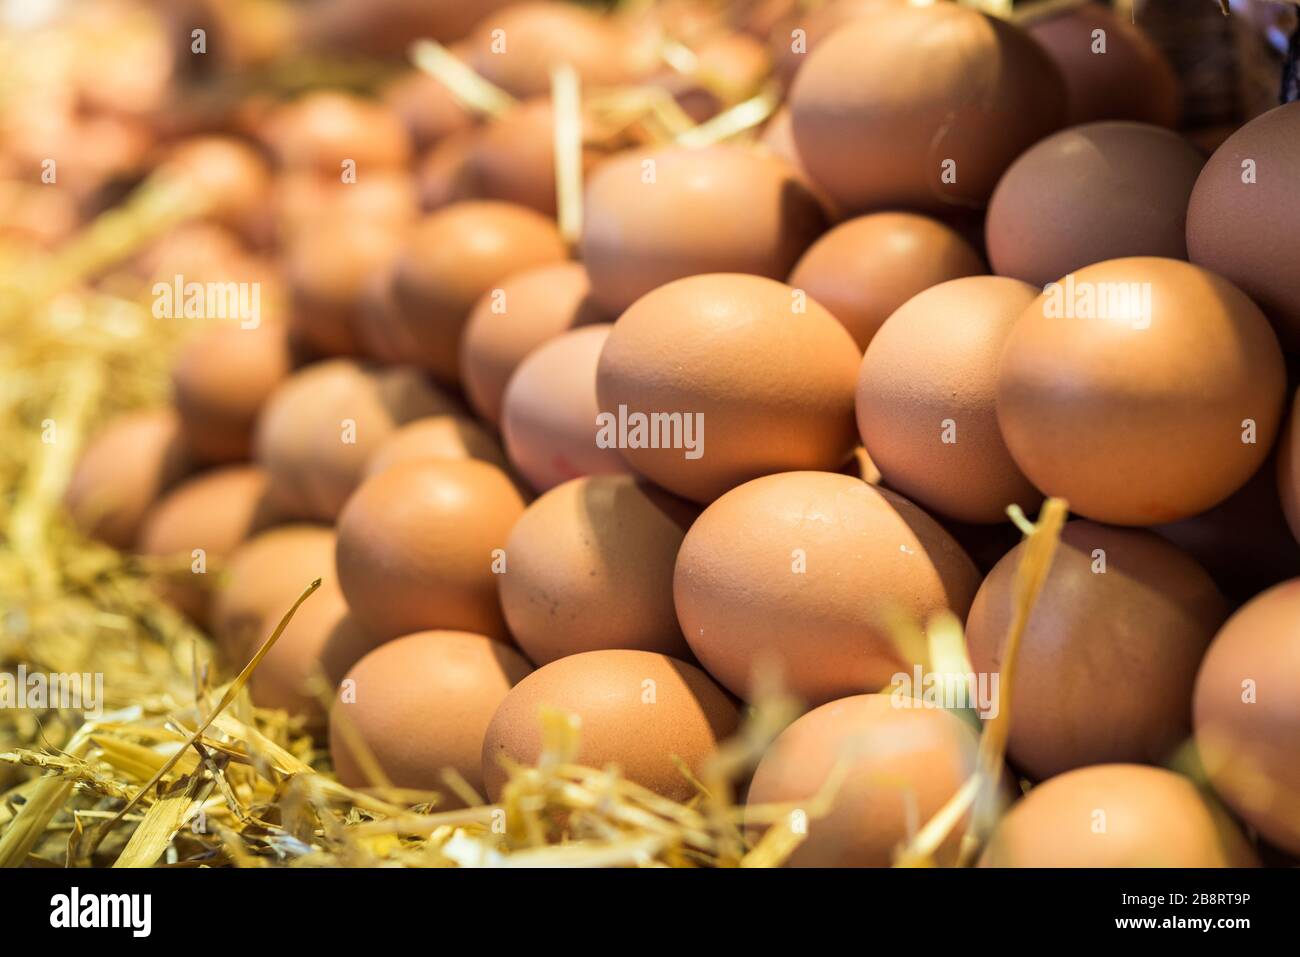 Fresh free range chicken eggs at a farmers market. Stock Photo